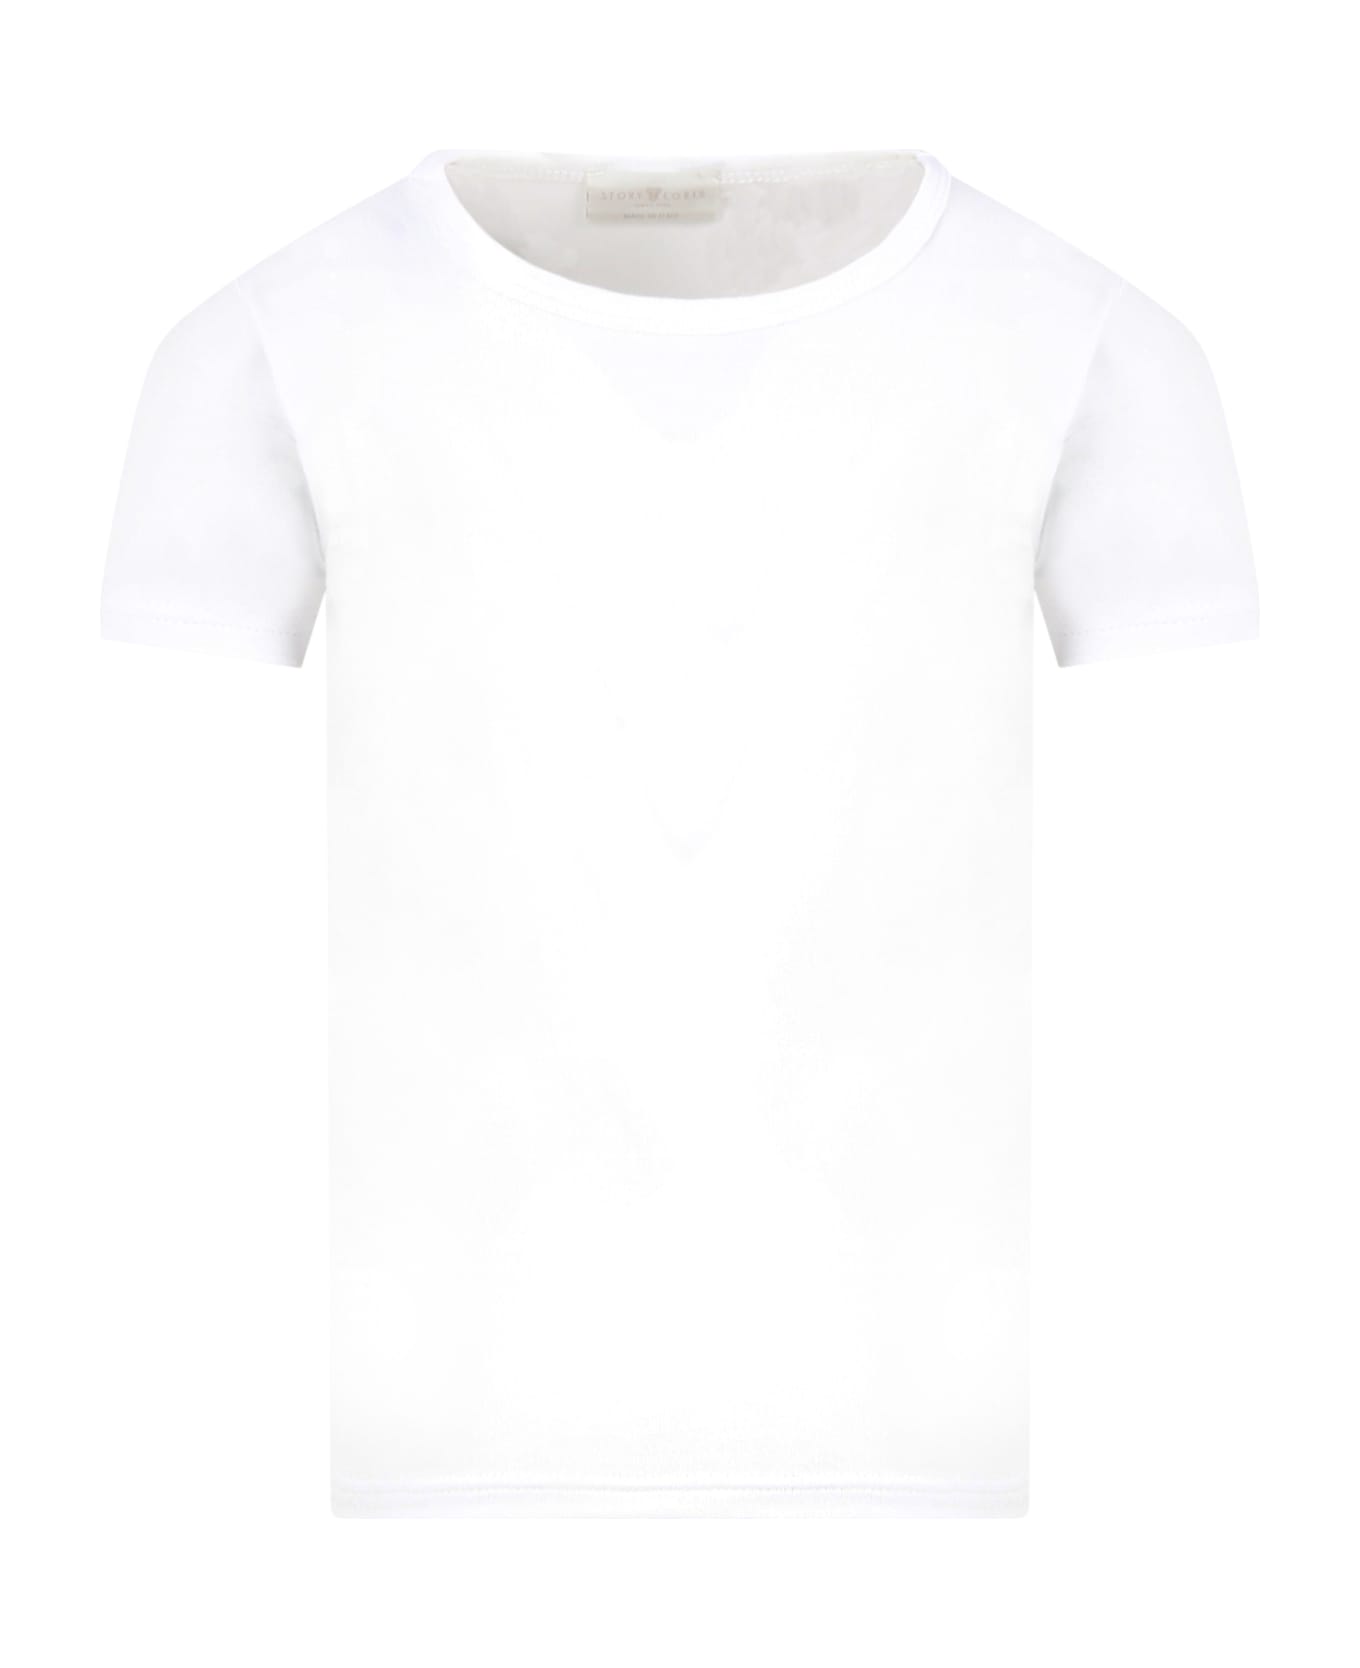 Story Loris White T-shirt For Kids - White